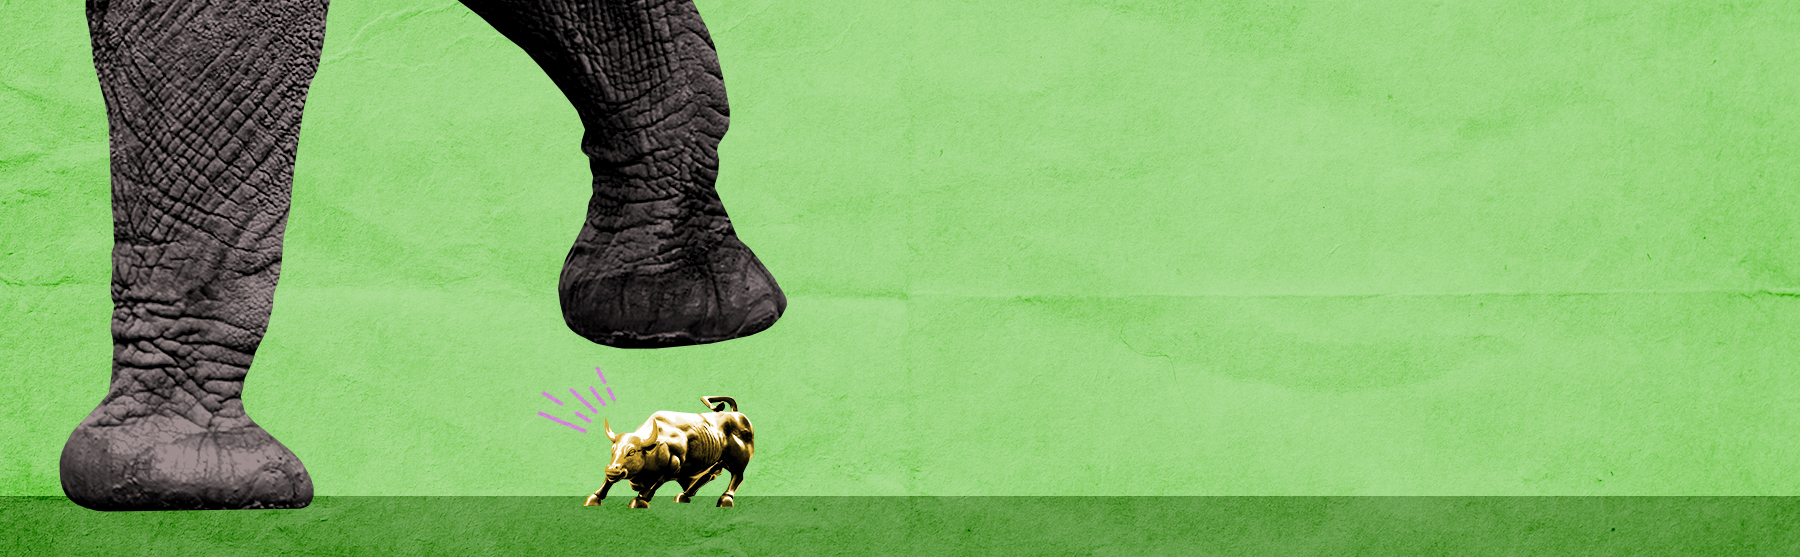 An elephant stepping on the Wall Street bull.